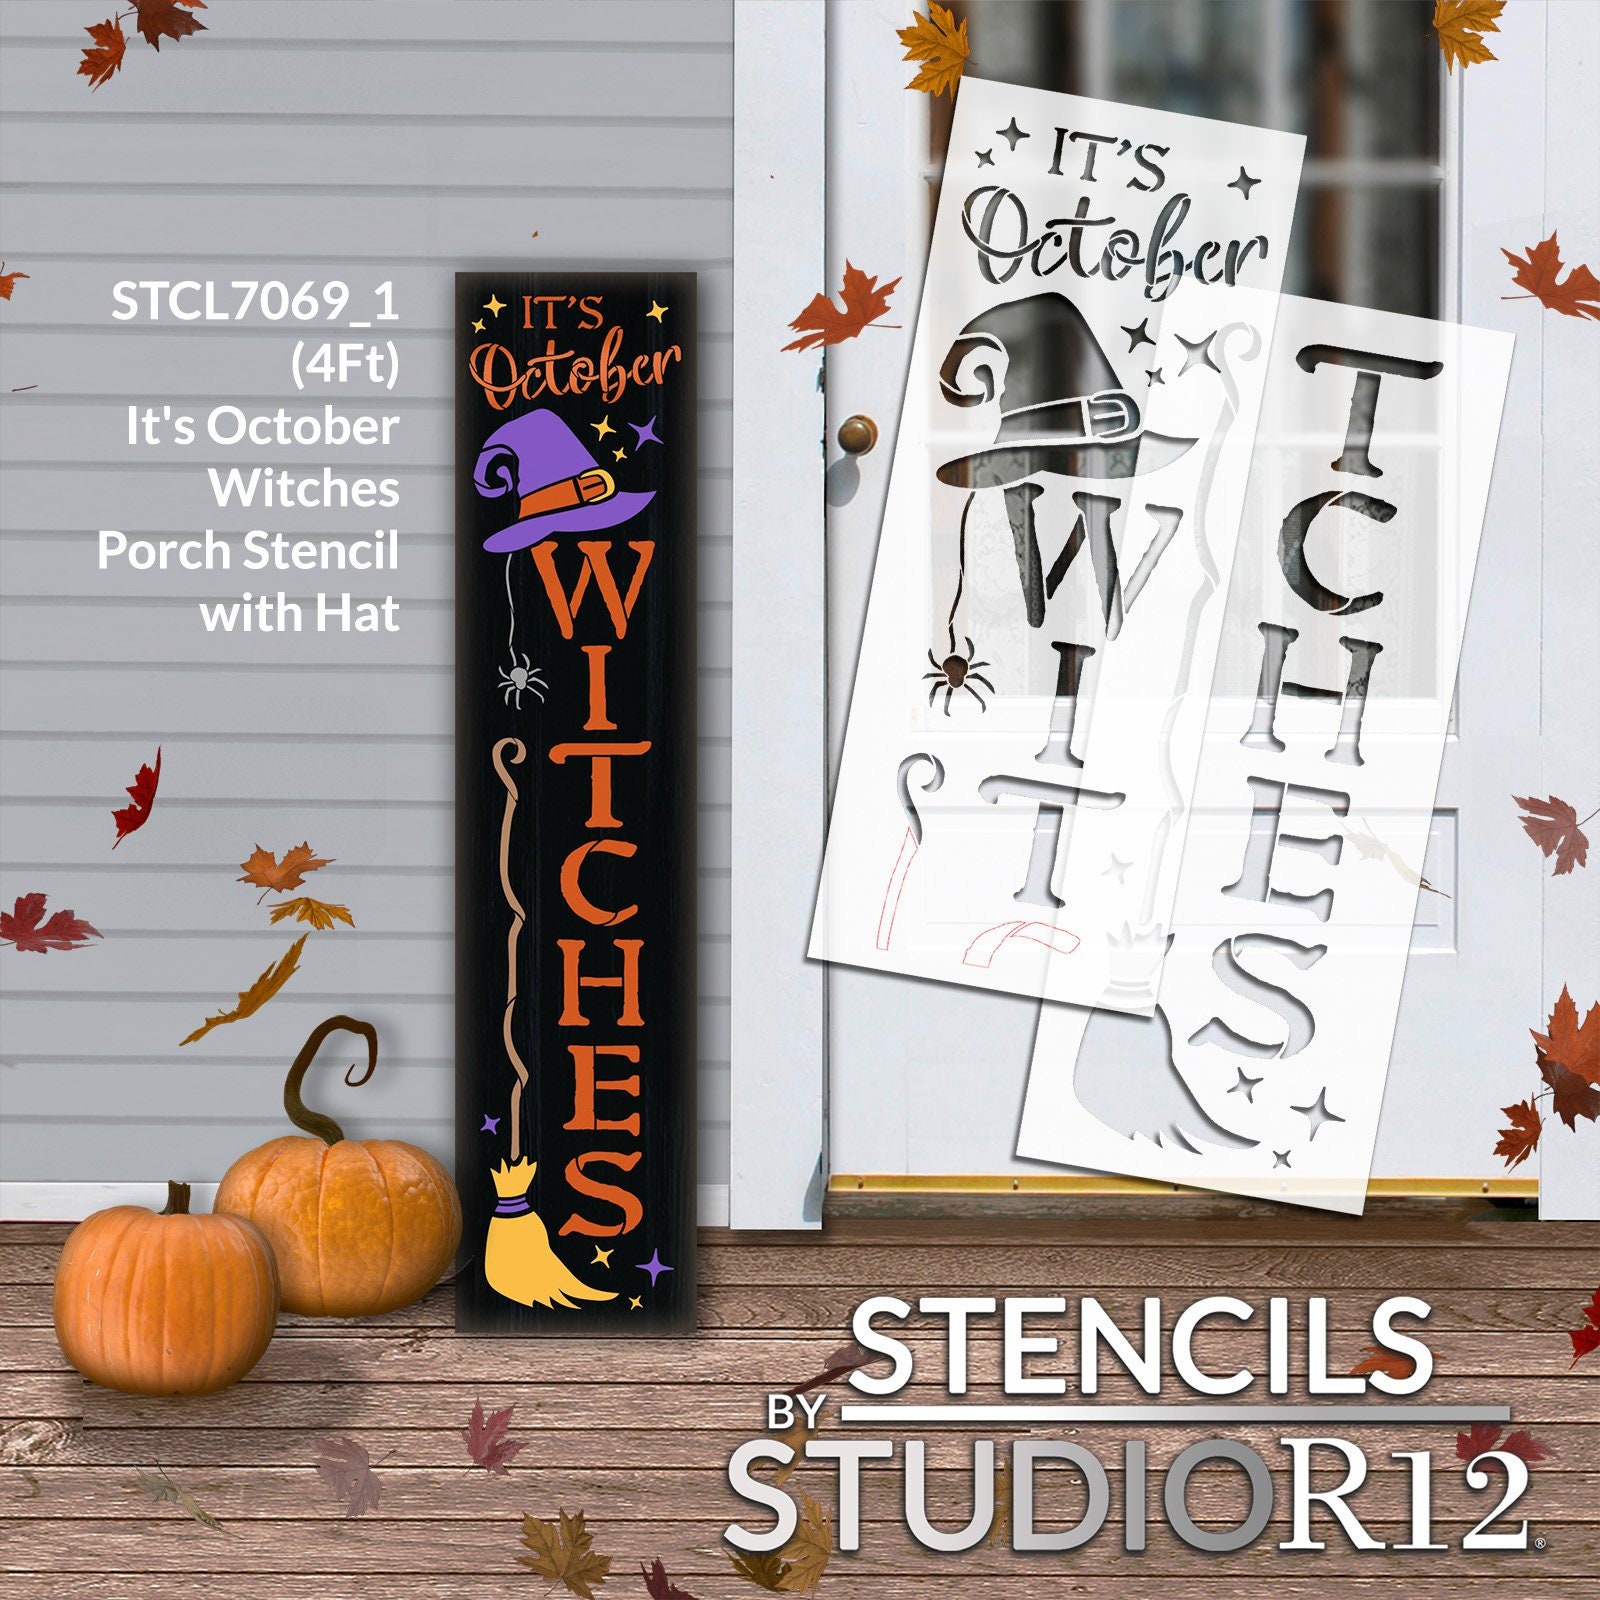 Farmhouse Chalkboard Calendar & Monogram 3-Part Stencil Set by StudioR12 DIY Home & Kitchen Decor Craft & Paint Wood Signs Size 16 x 24 inch